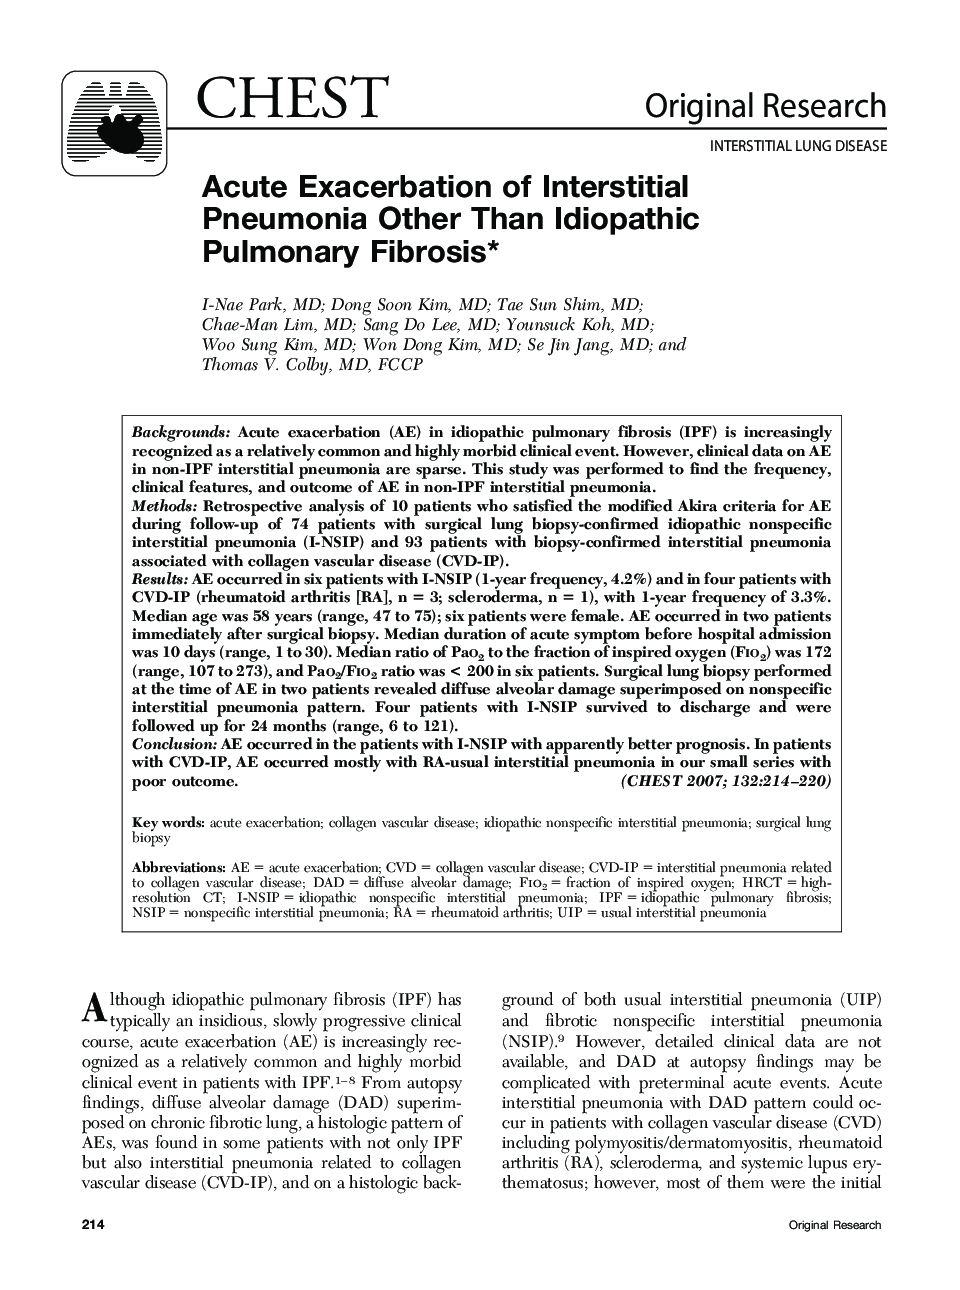 Acute Exacerbation of Interstitial Pneumonia Other Than Idiopathic Pulmonary Fibrosis 